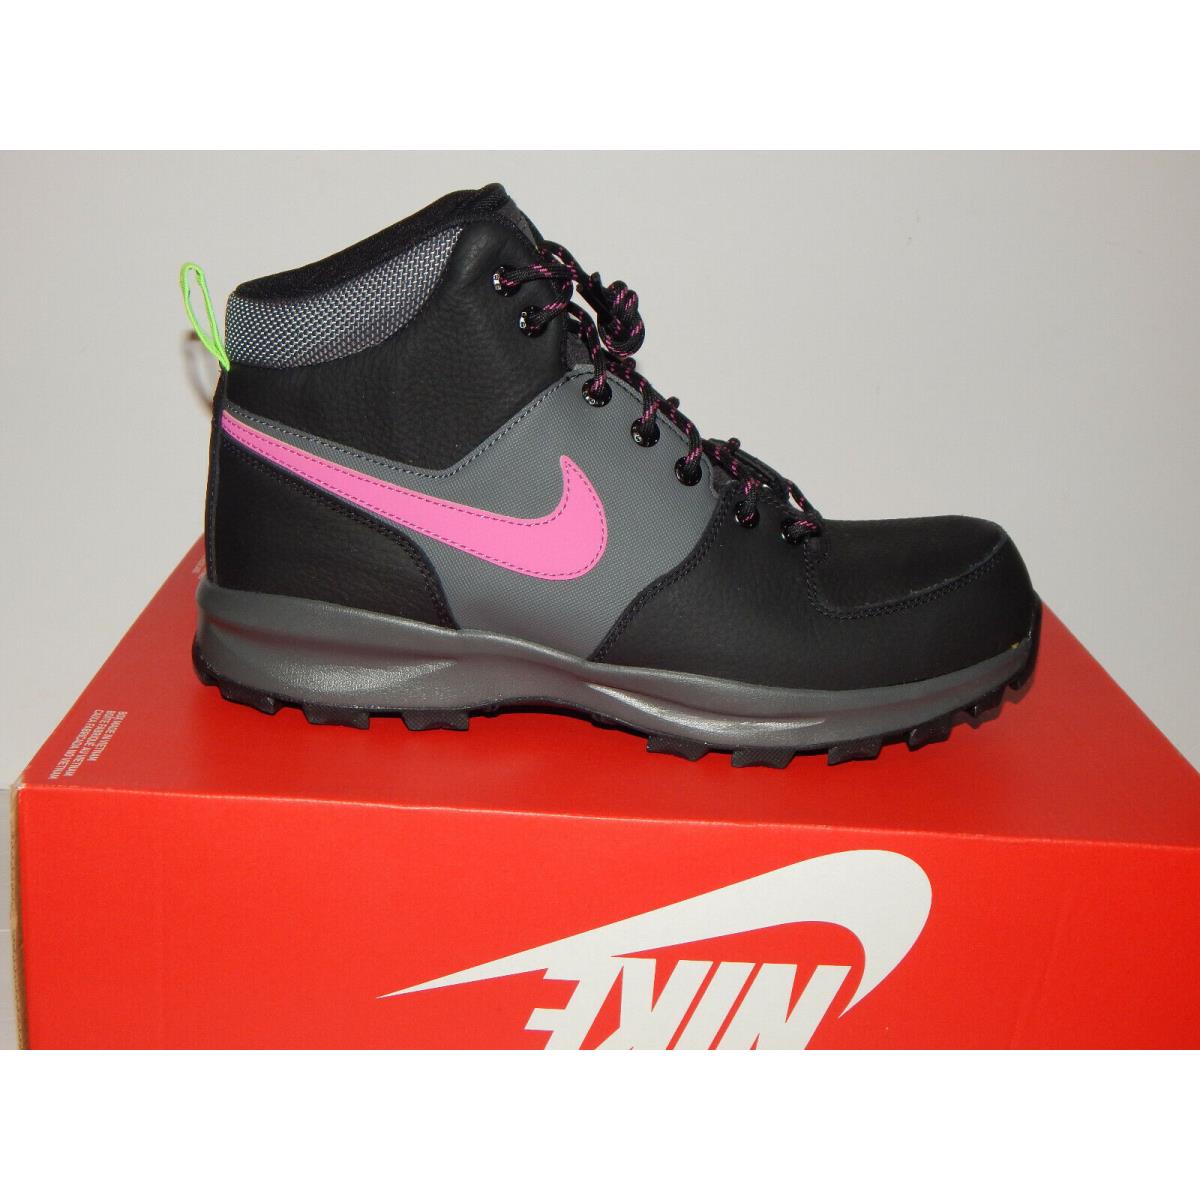 Nike Manoa Leather SE Mens Shoes / Boots CW7360-001 Size 10 Black/fuchsia/grey